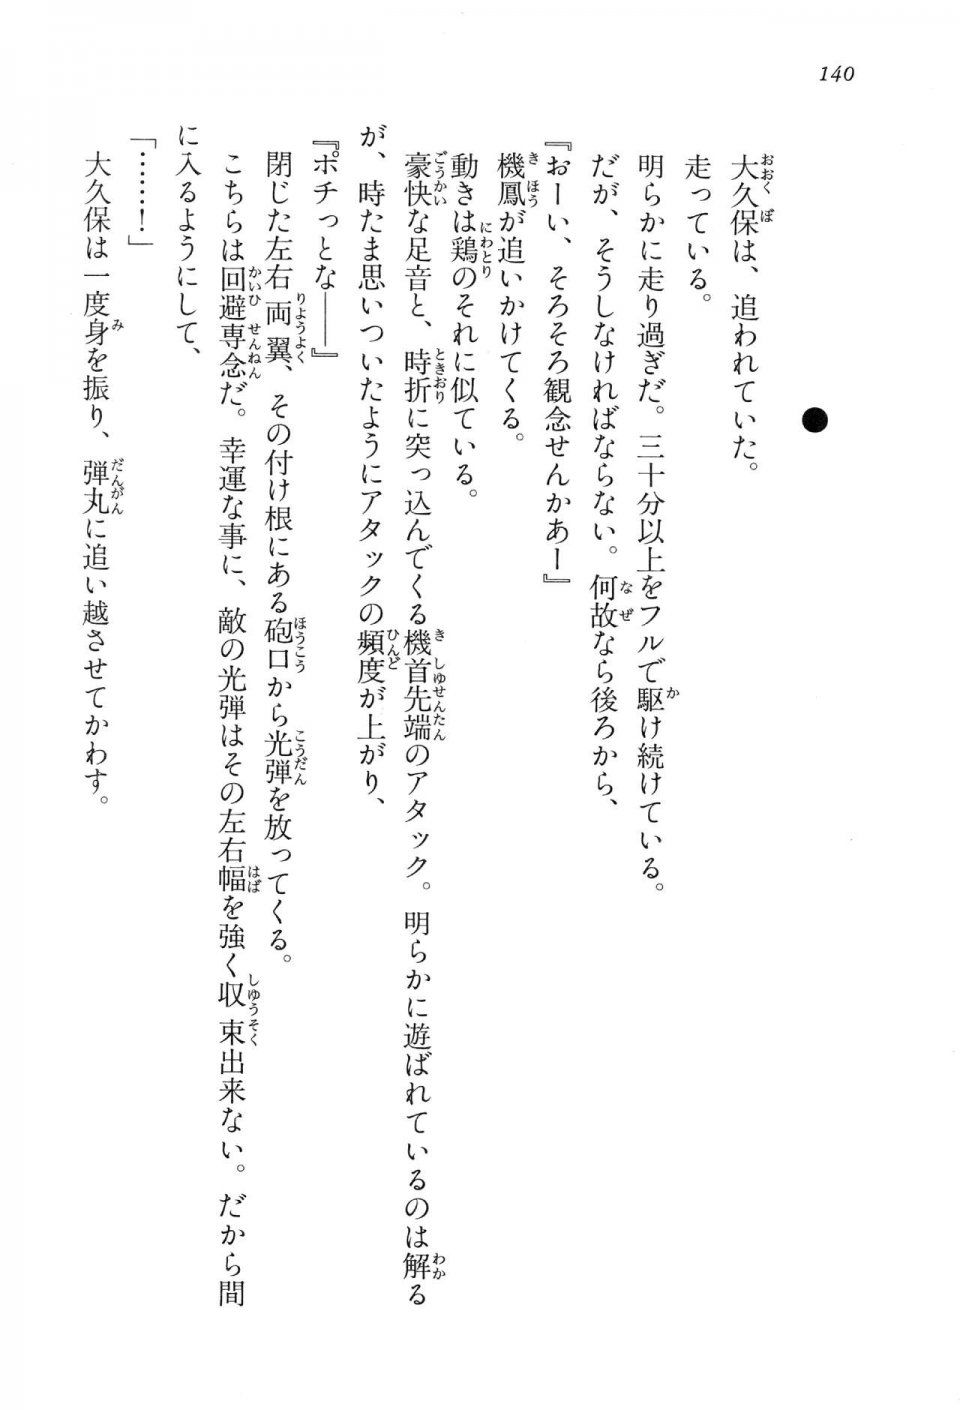 Kyoukai Senjou no Horizon LN Vol 15(6C) Part 1 - Photo #140